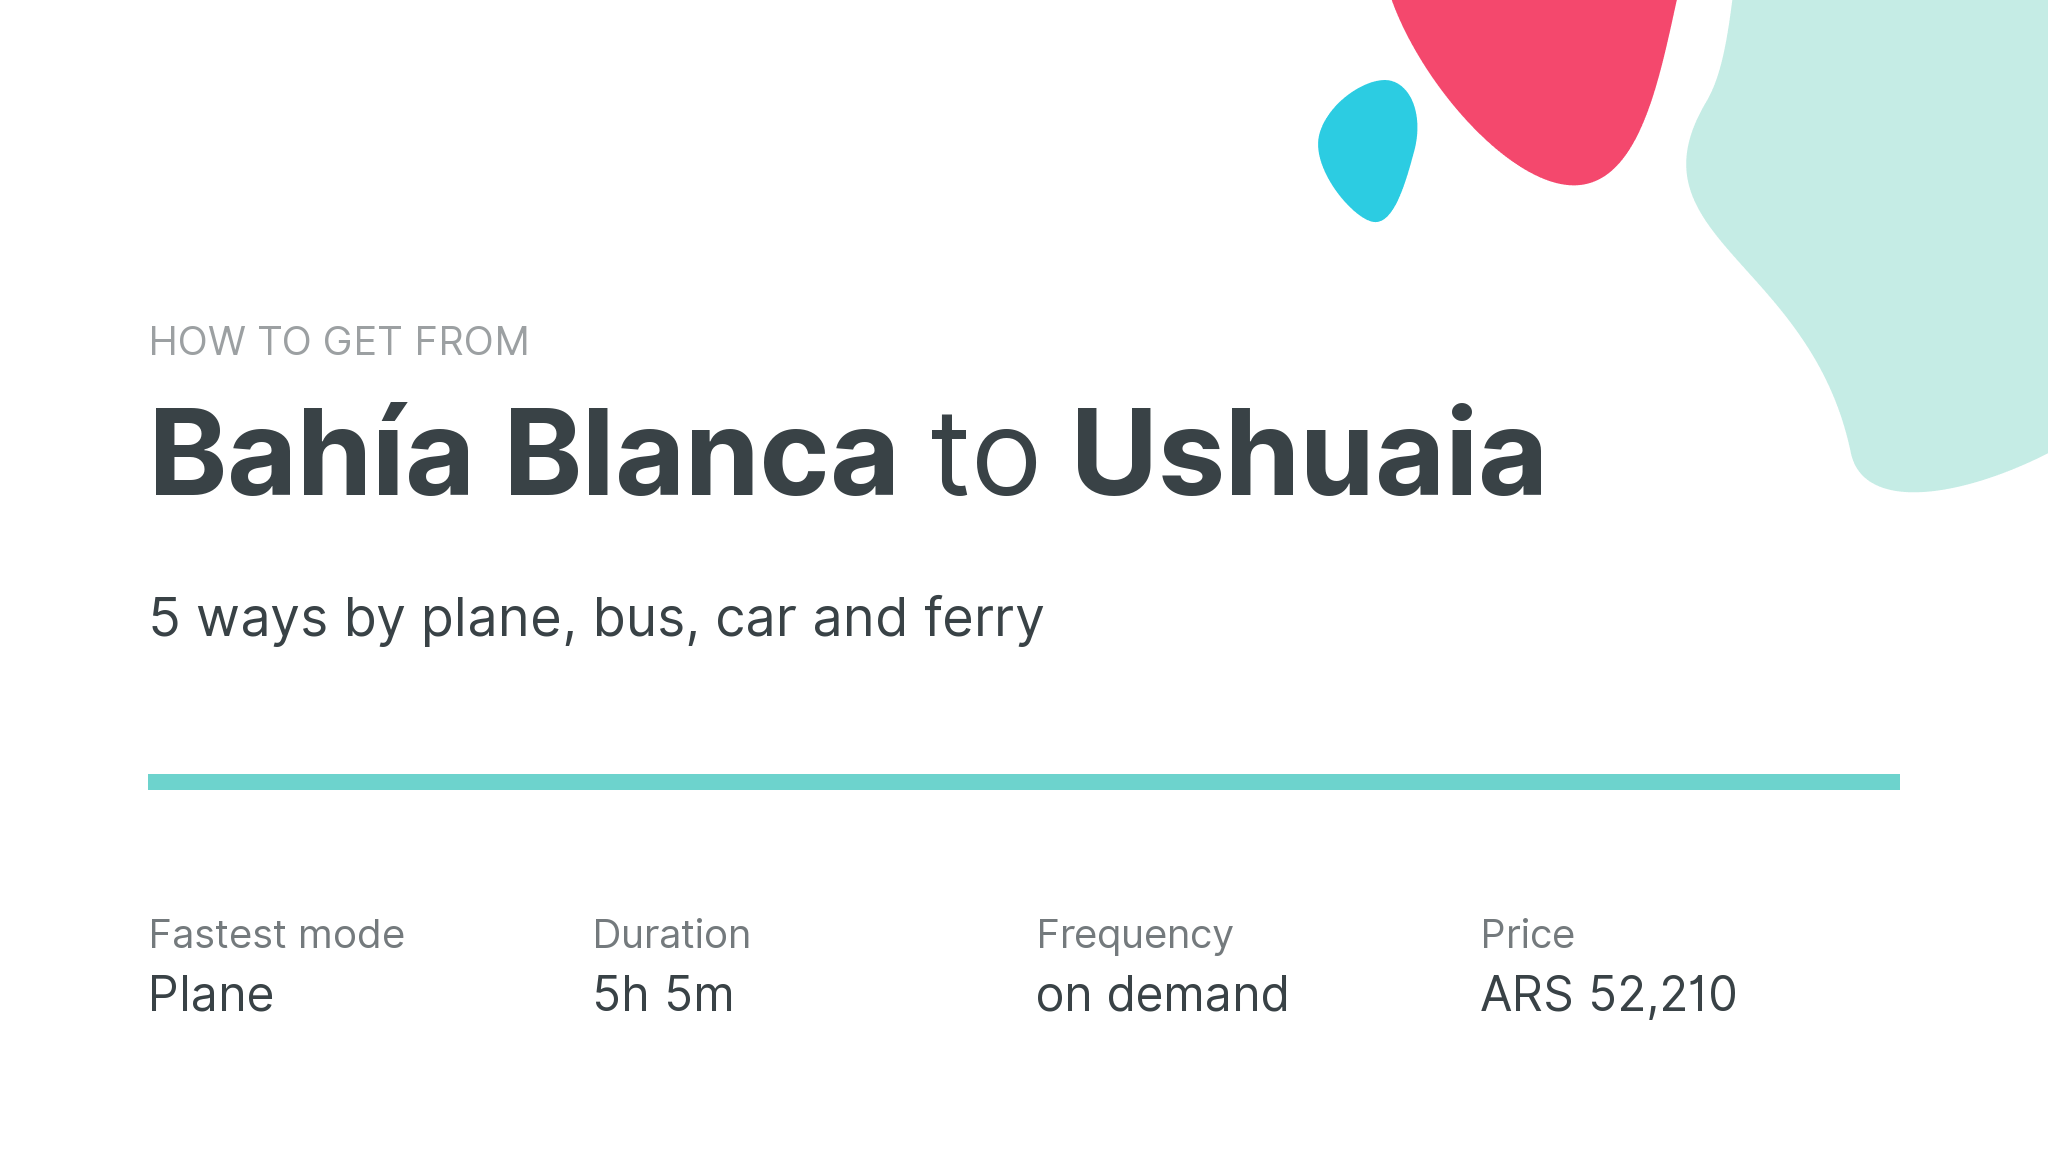 How do I get from Bahía Blanca to Ushuaia